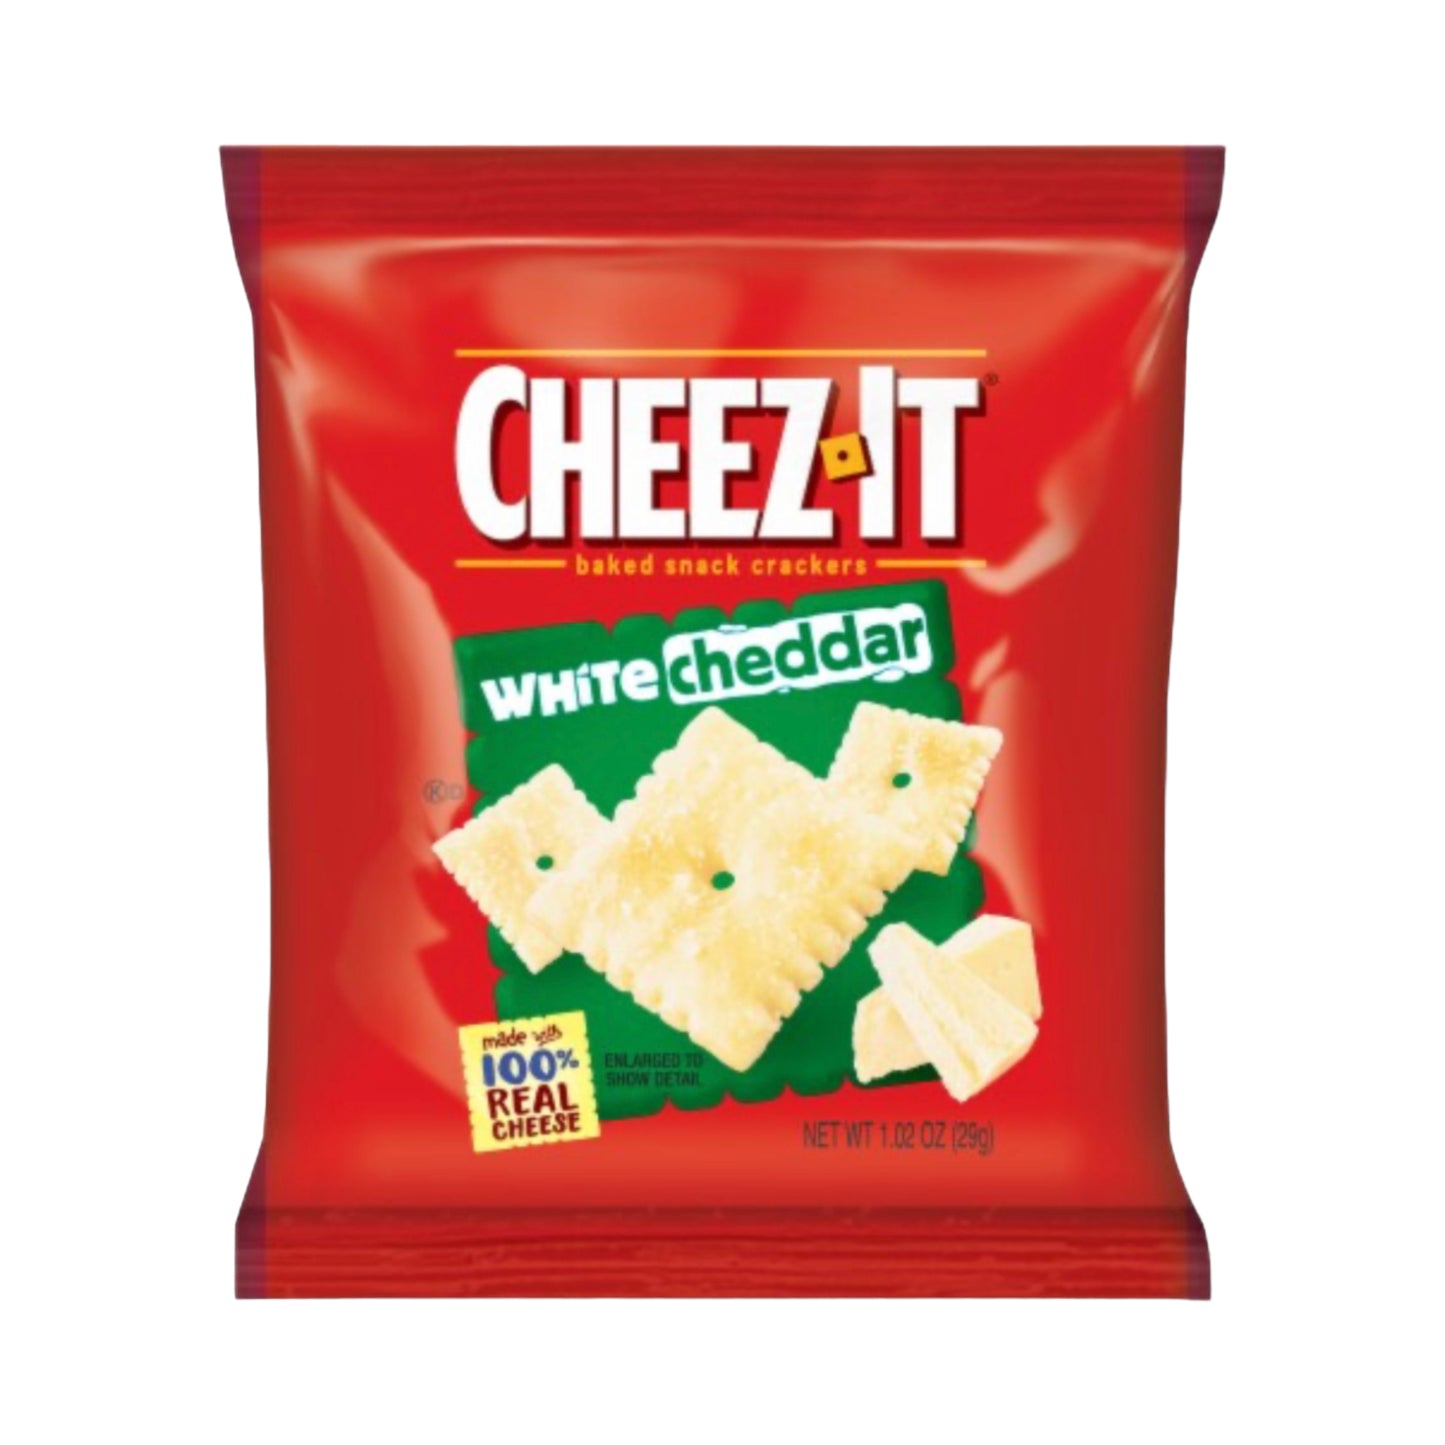 Cheez Its White Cheddar - 1.02oz (29g)